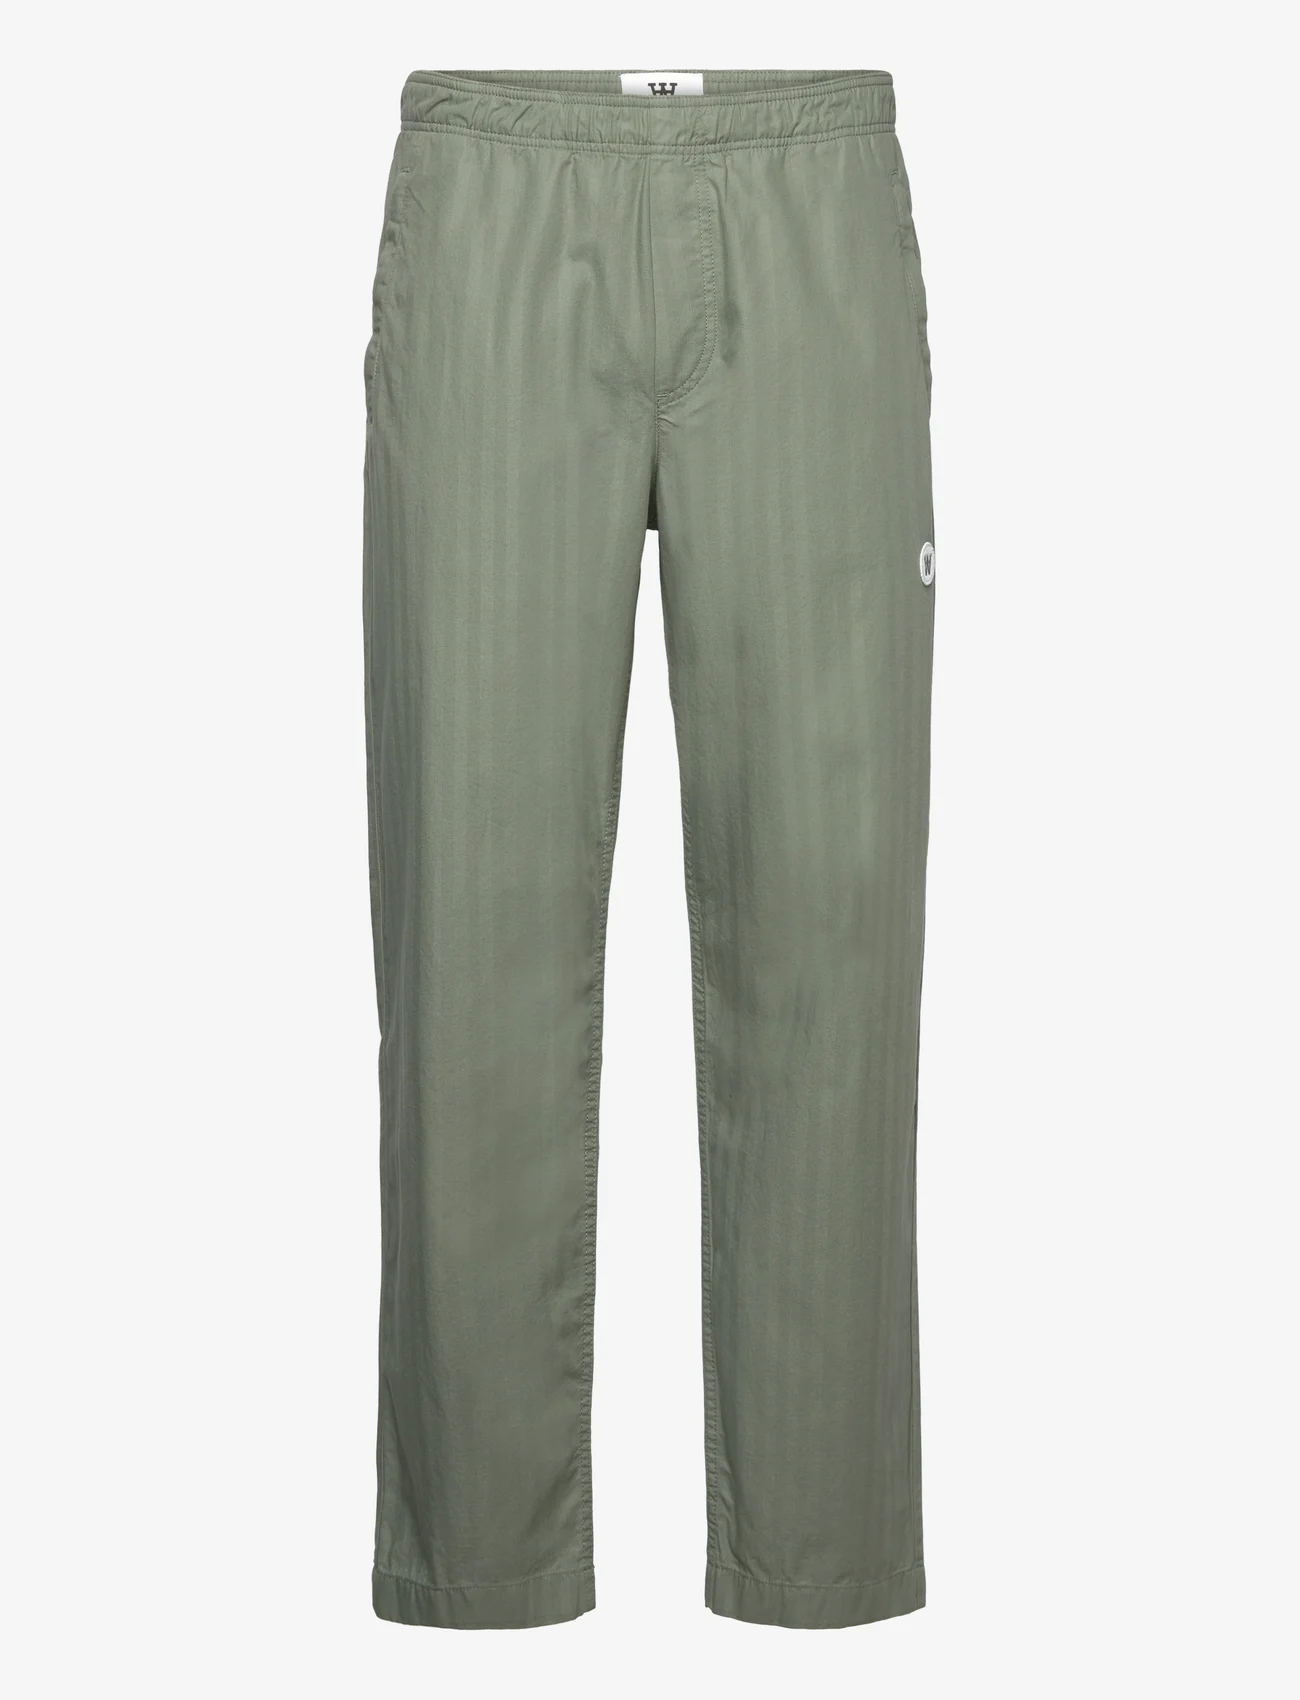 Double A by Wood Wood - Lee herringbone trousers - casual byxor - olive - 0